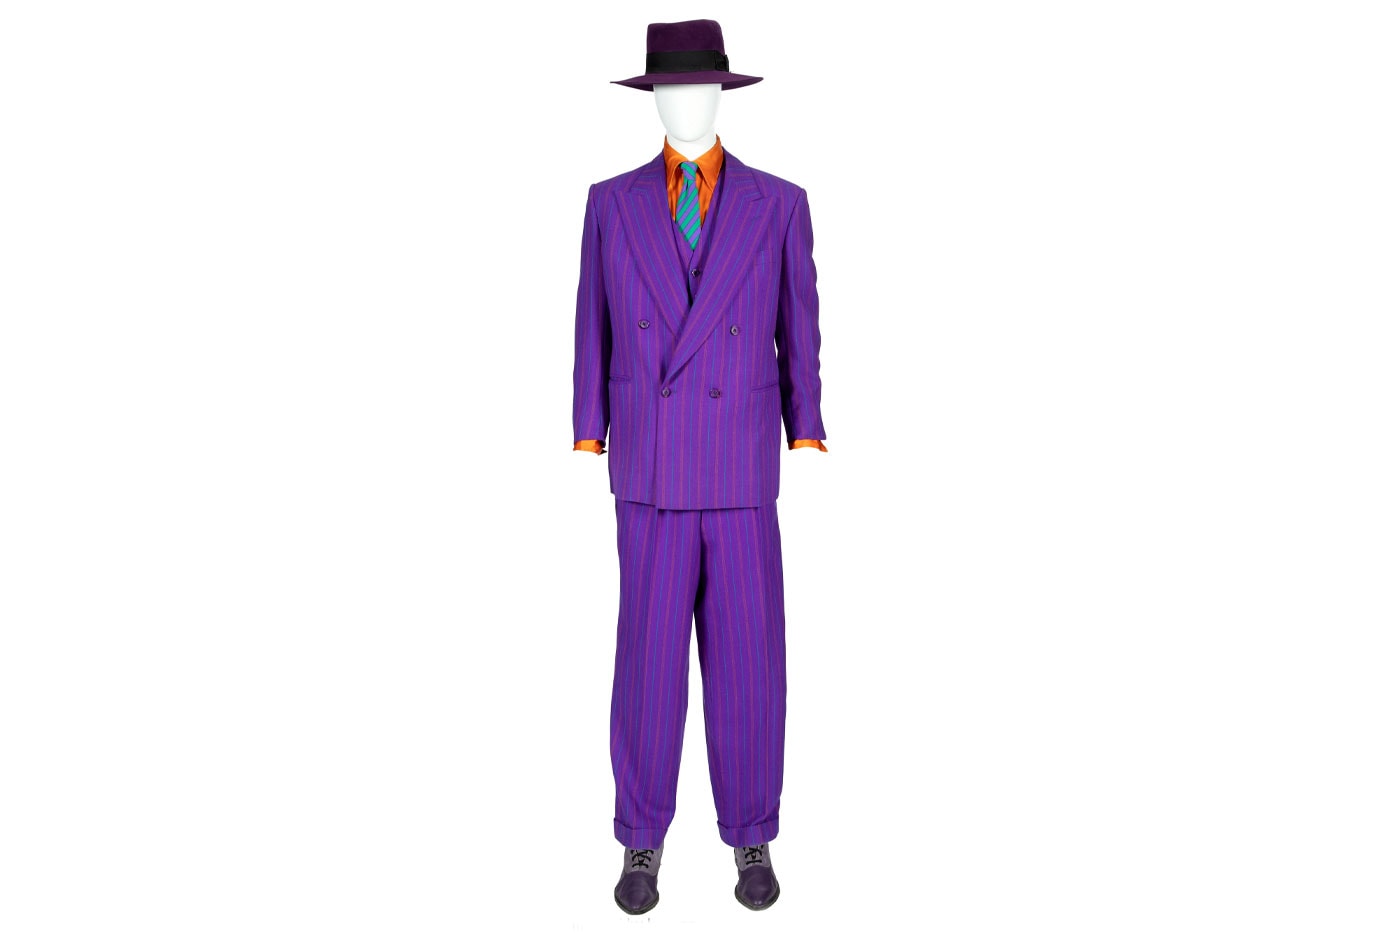 Jack Nicholson tim burton Batman purple Joker Suit auction 60 000 usd opening bid